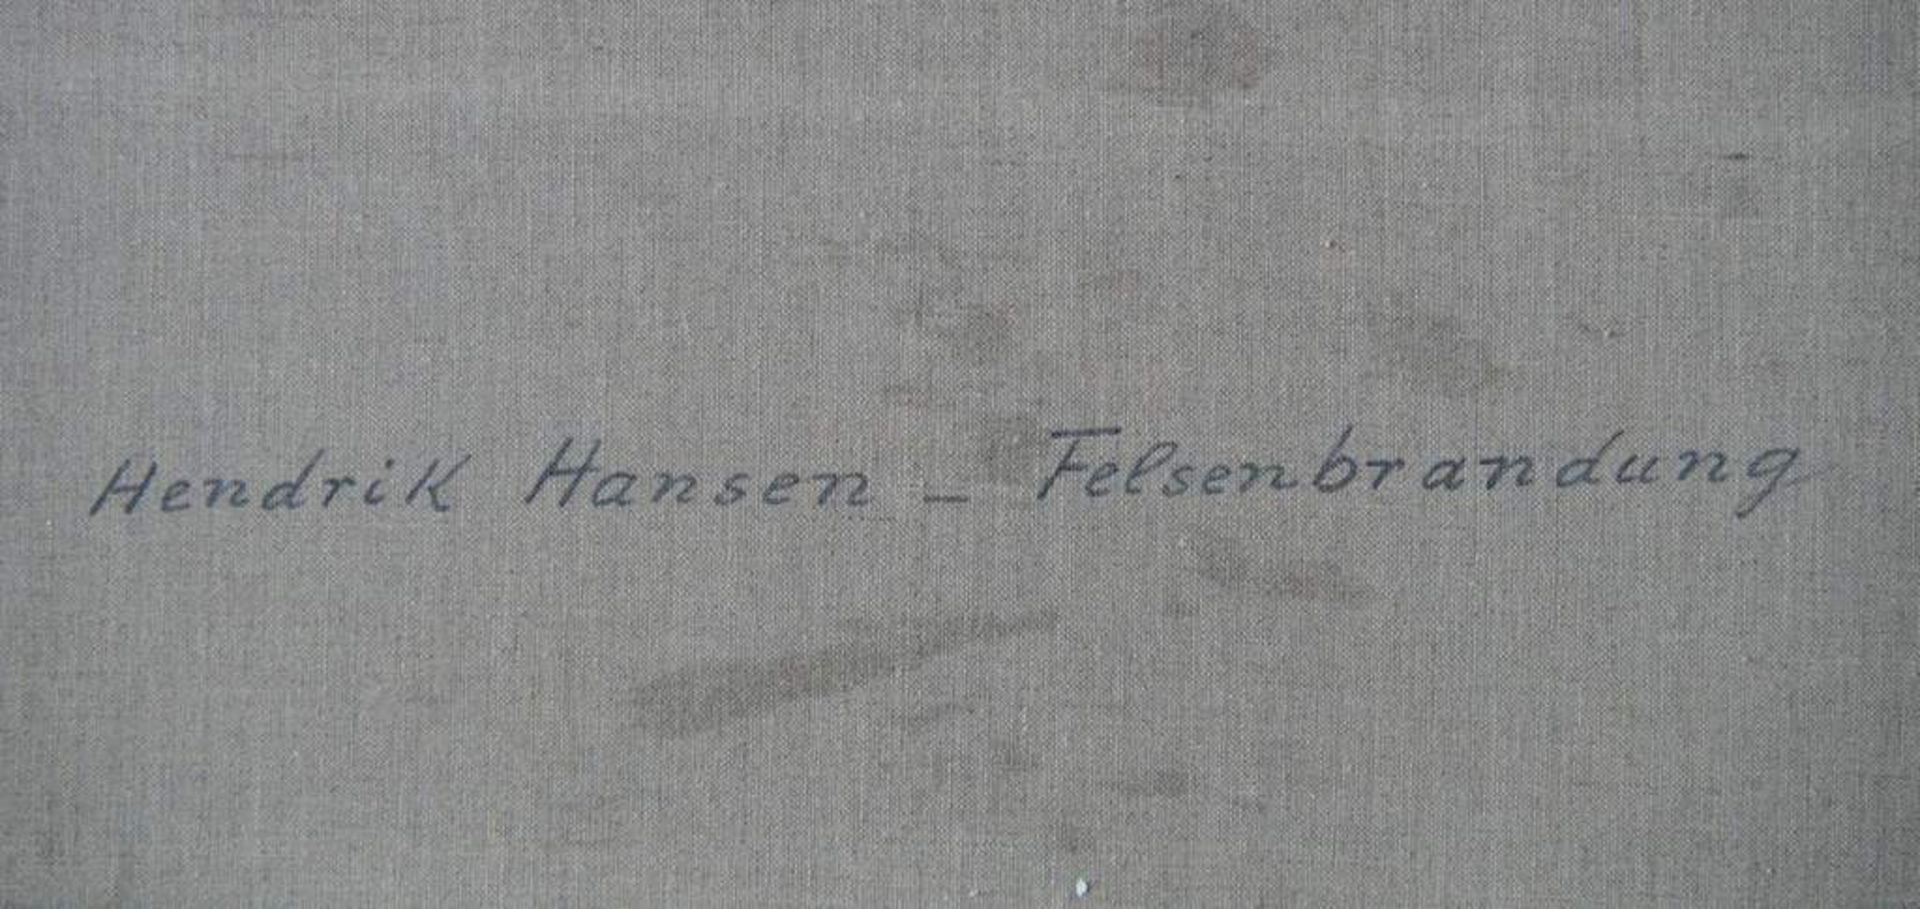 HANSEN, Hendrik. - Image 5 of 6